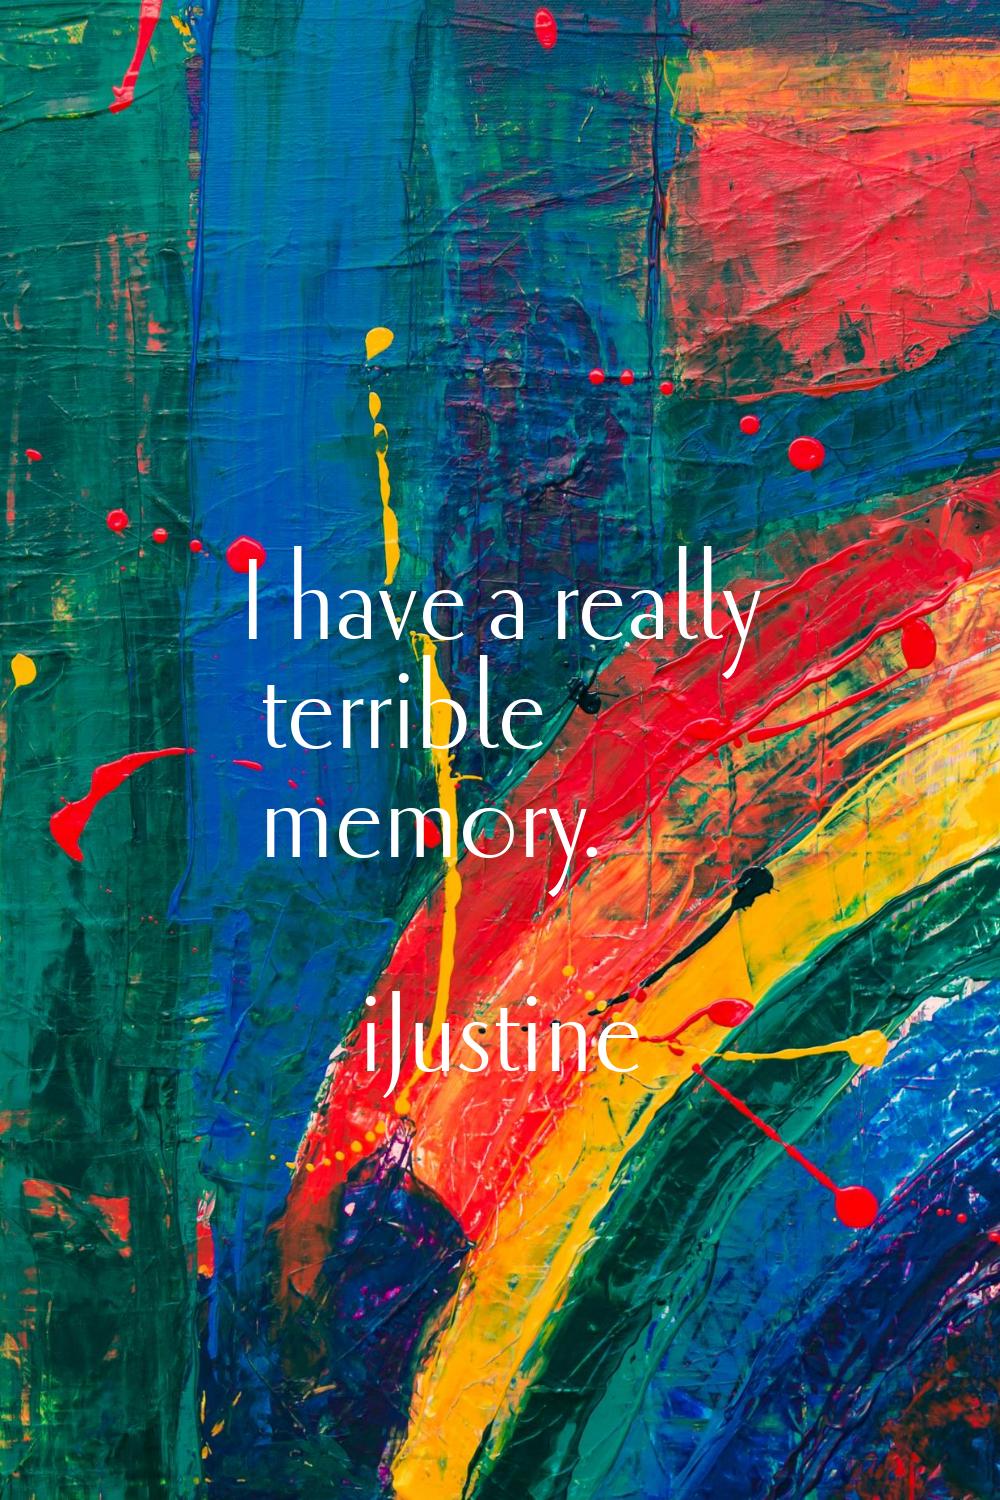 I have a really terrible memory.